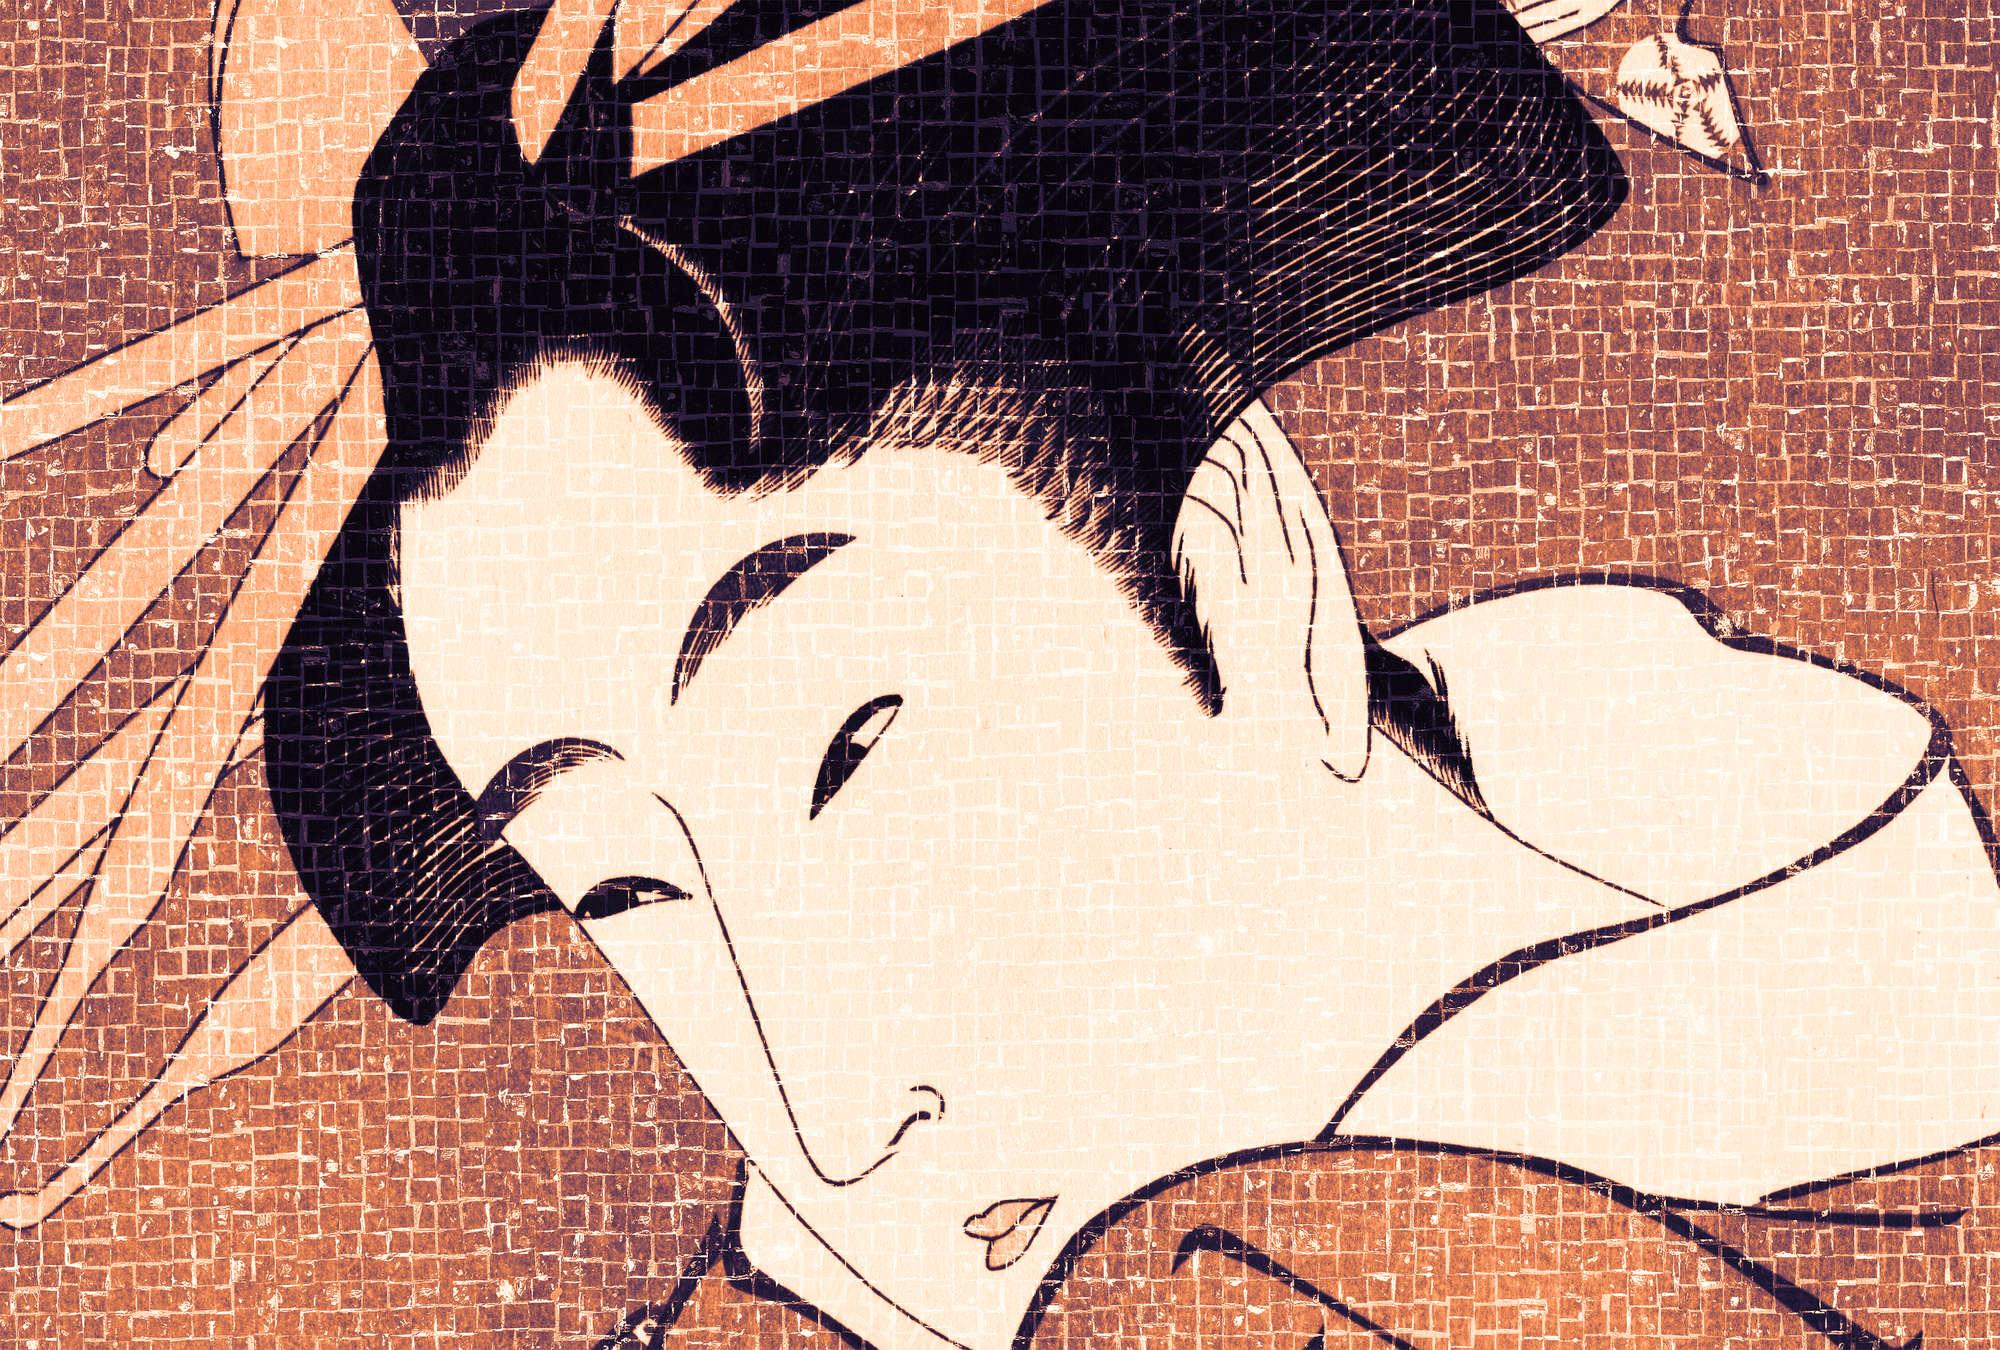             Fototapete Samurai, Asien Design im Pixel-Stil – Orange, Creme, Schwarz
        